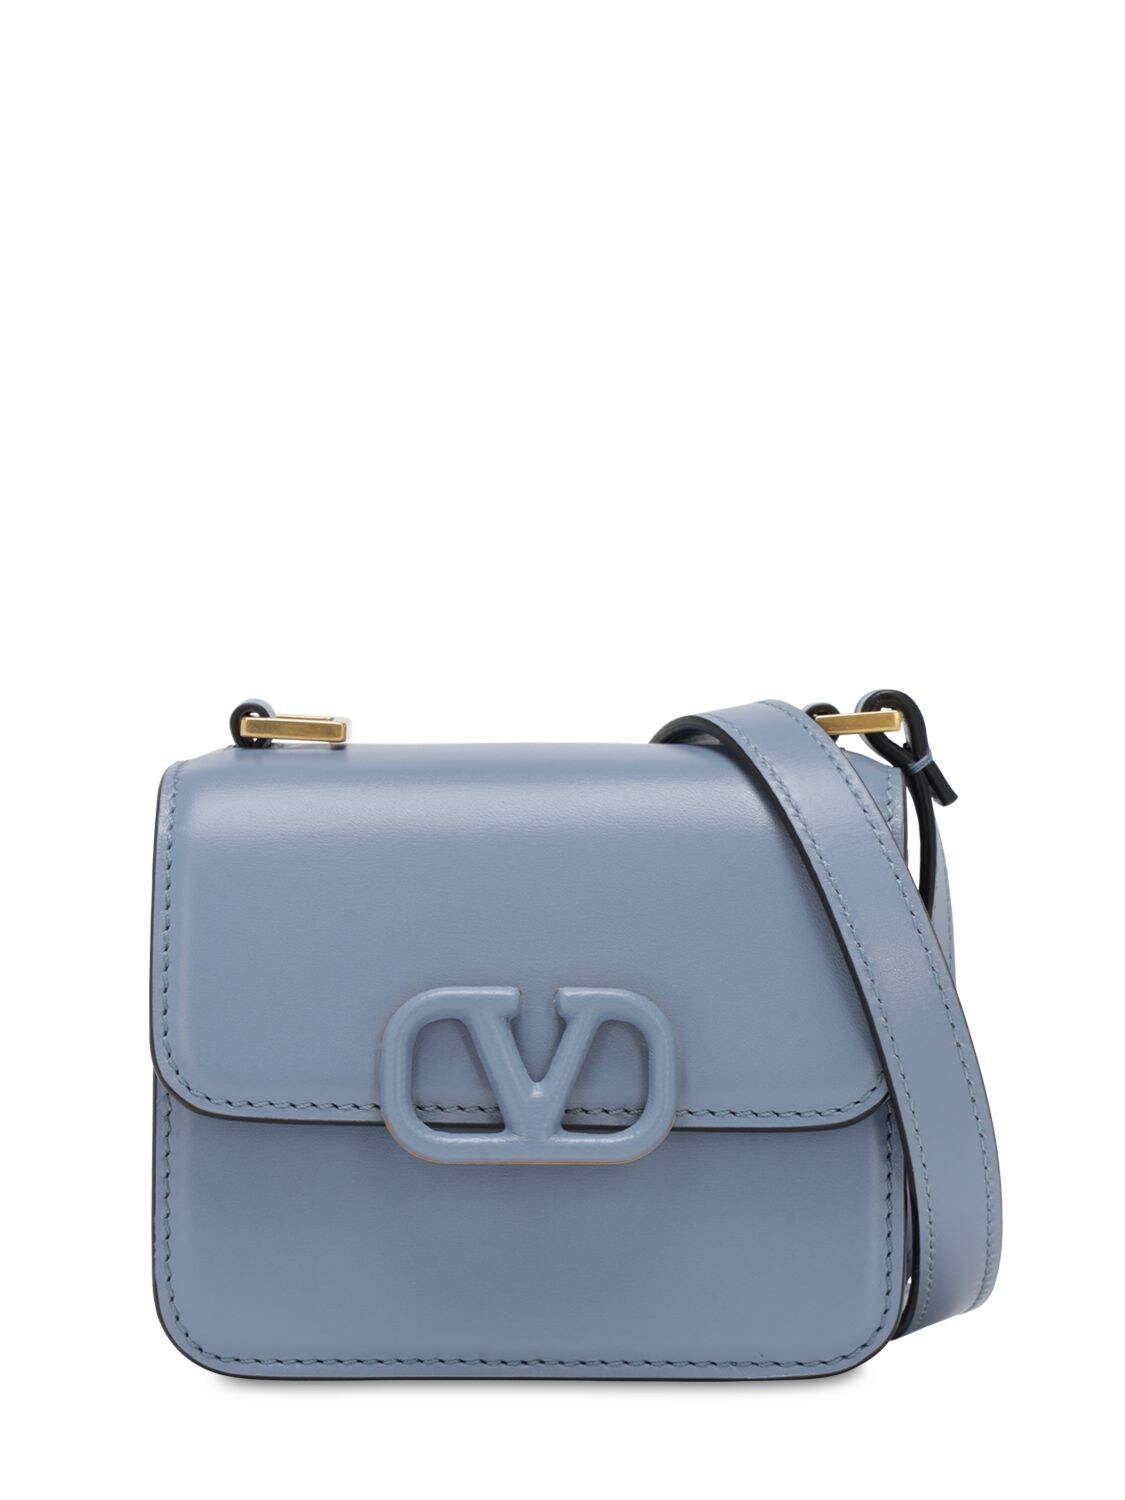 Valentino Garavani Small VSling Shoulder Bag in Niagara